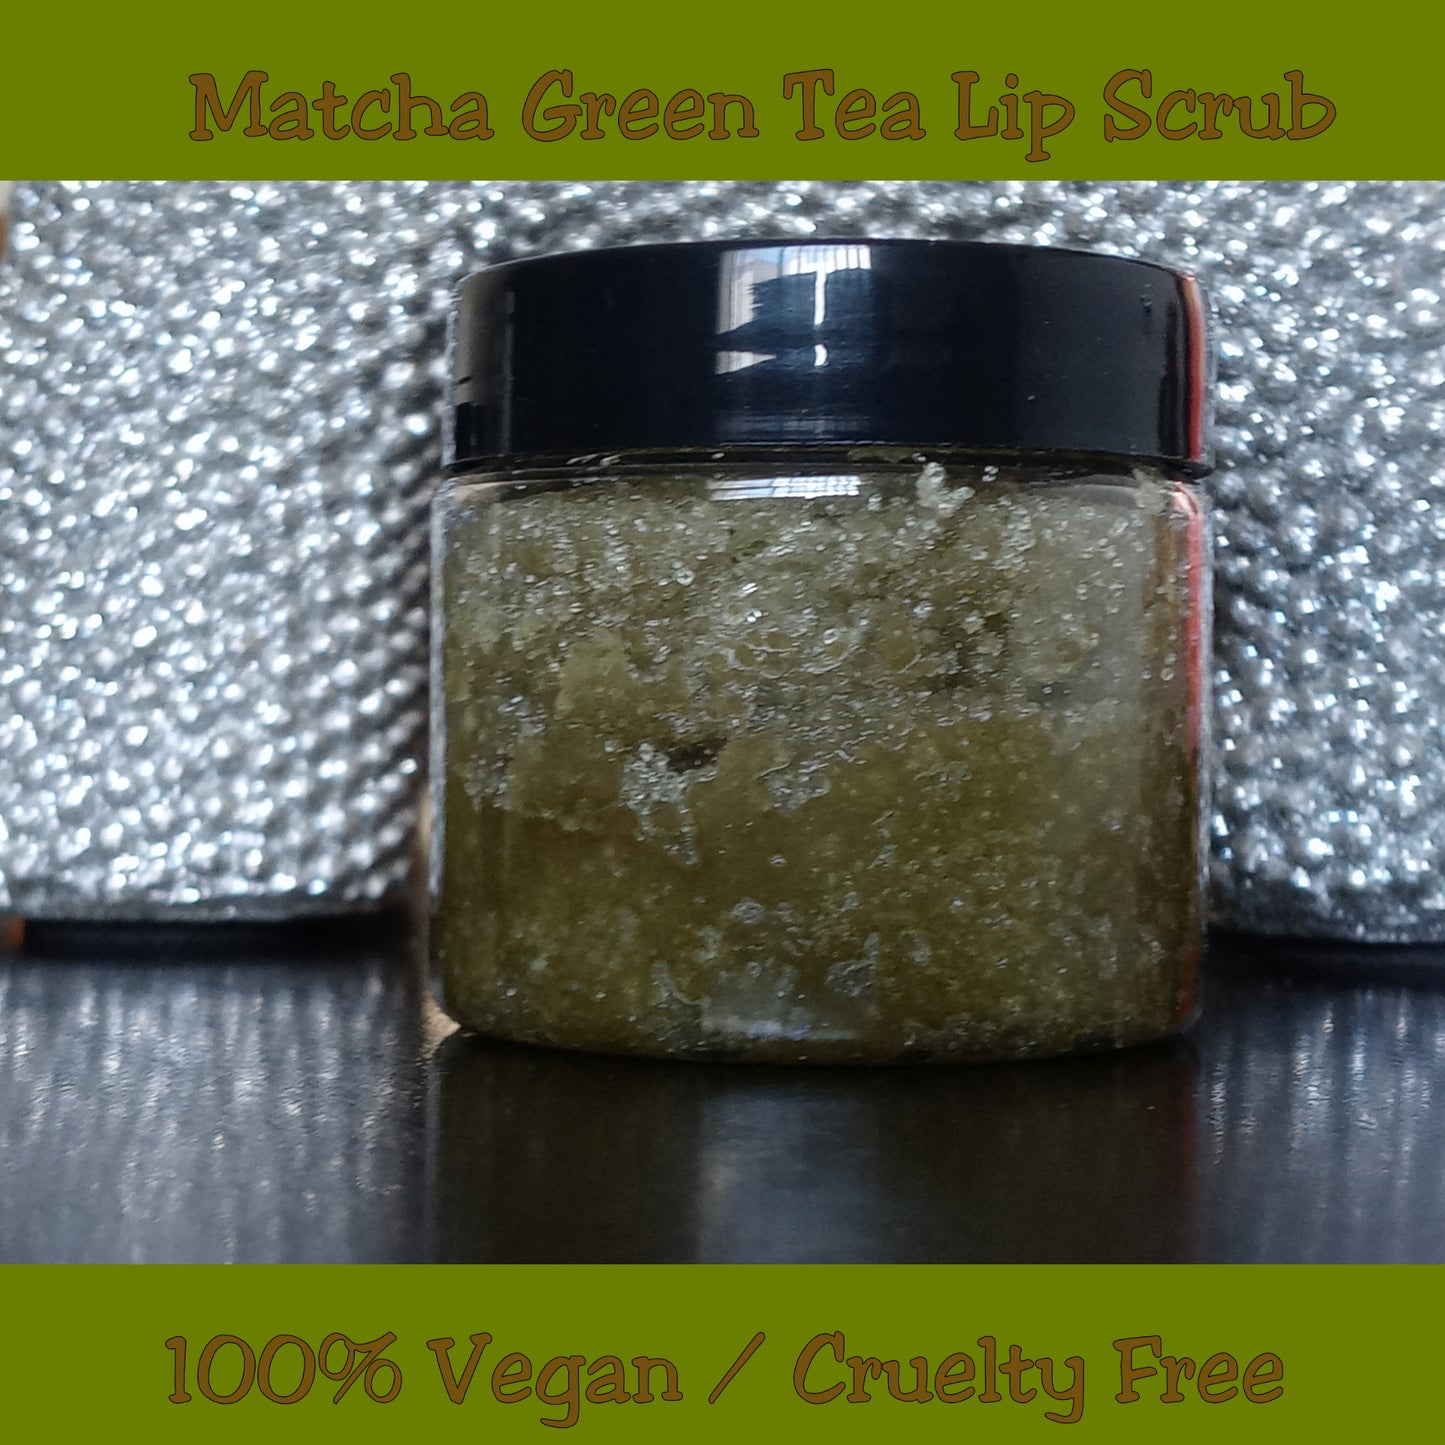 Matcha Green Tea Lip Scrub 2oz. 100% Vegan / Cruelty Free